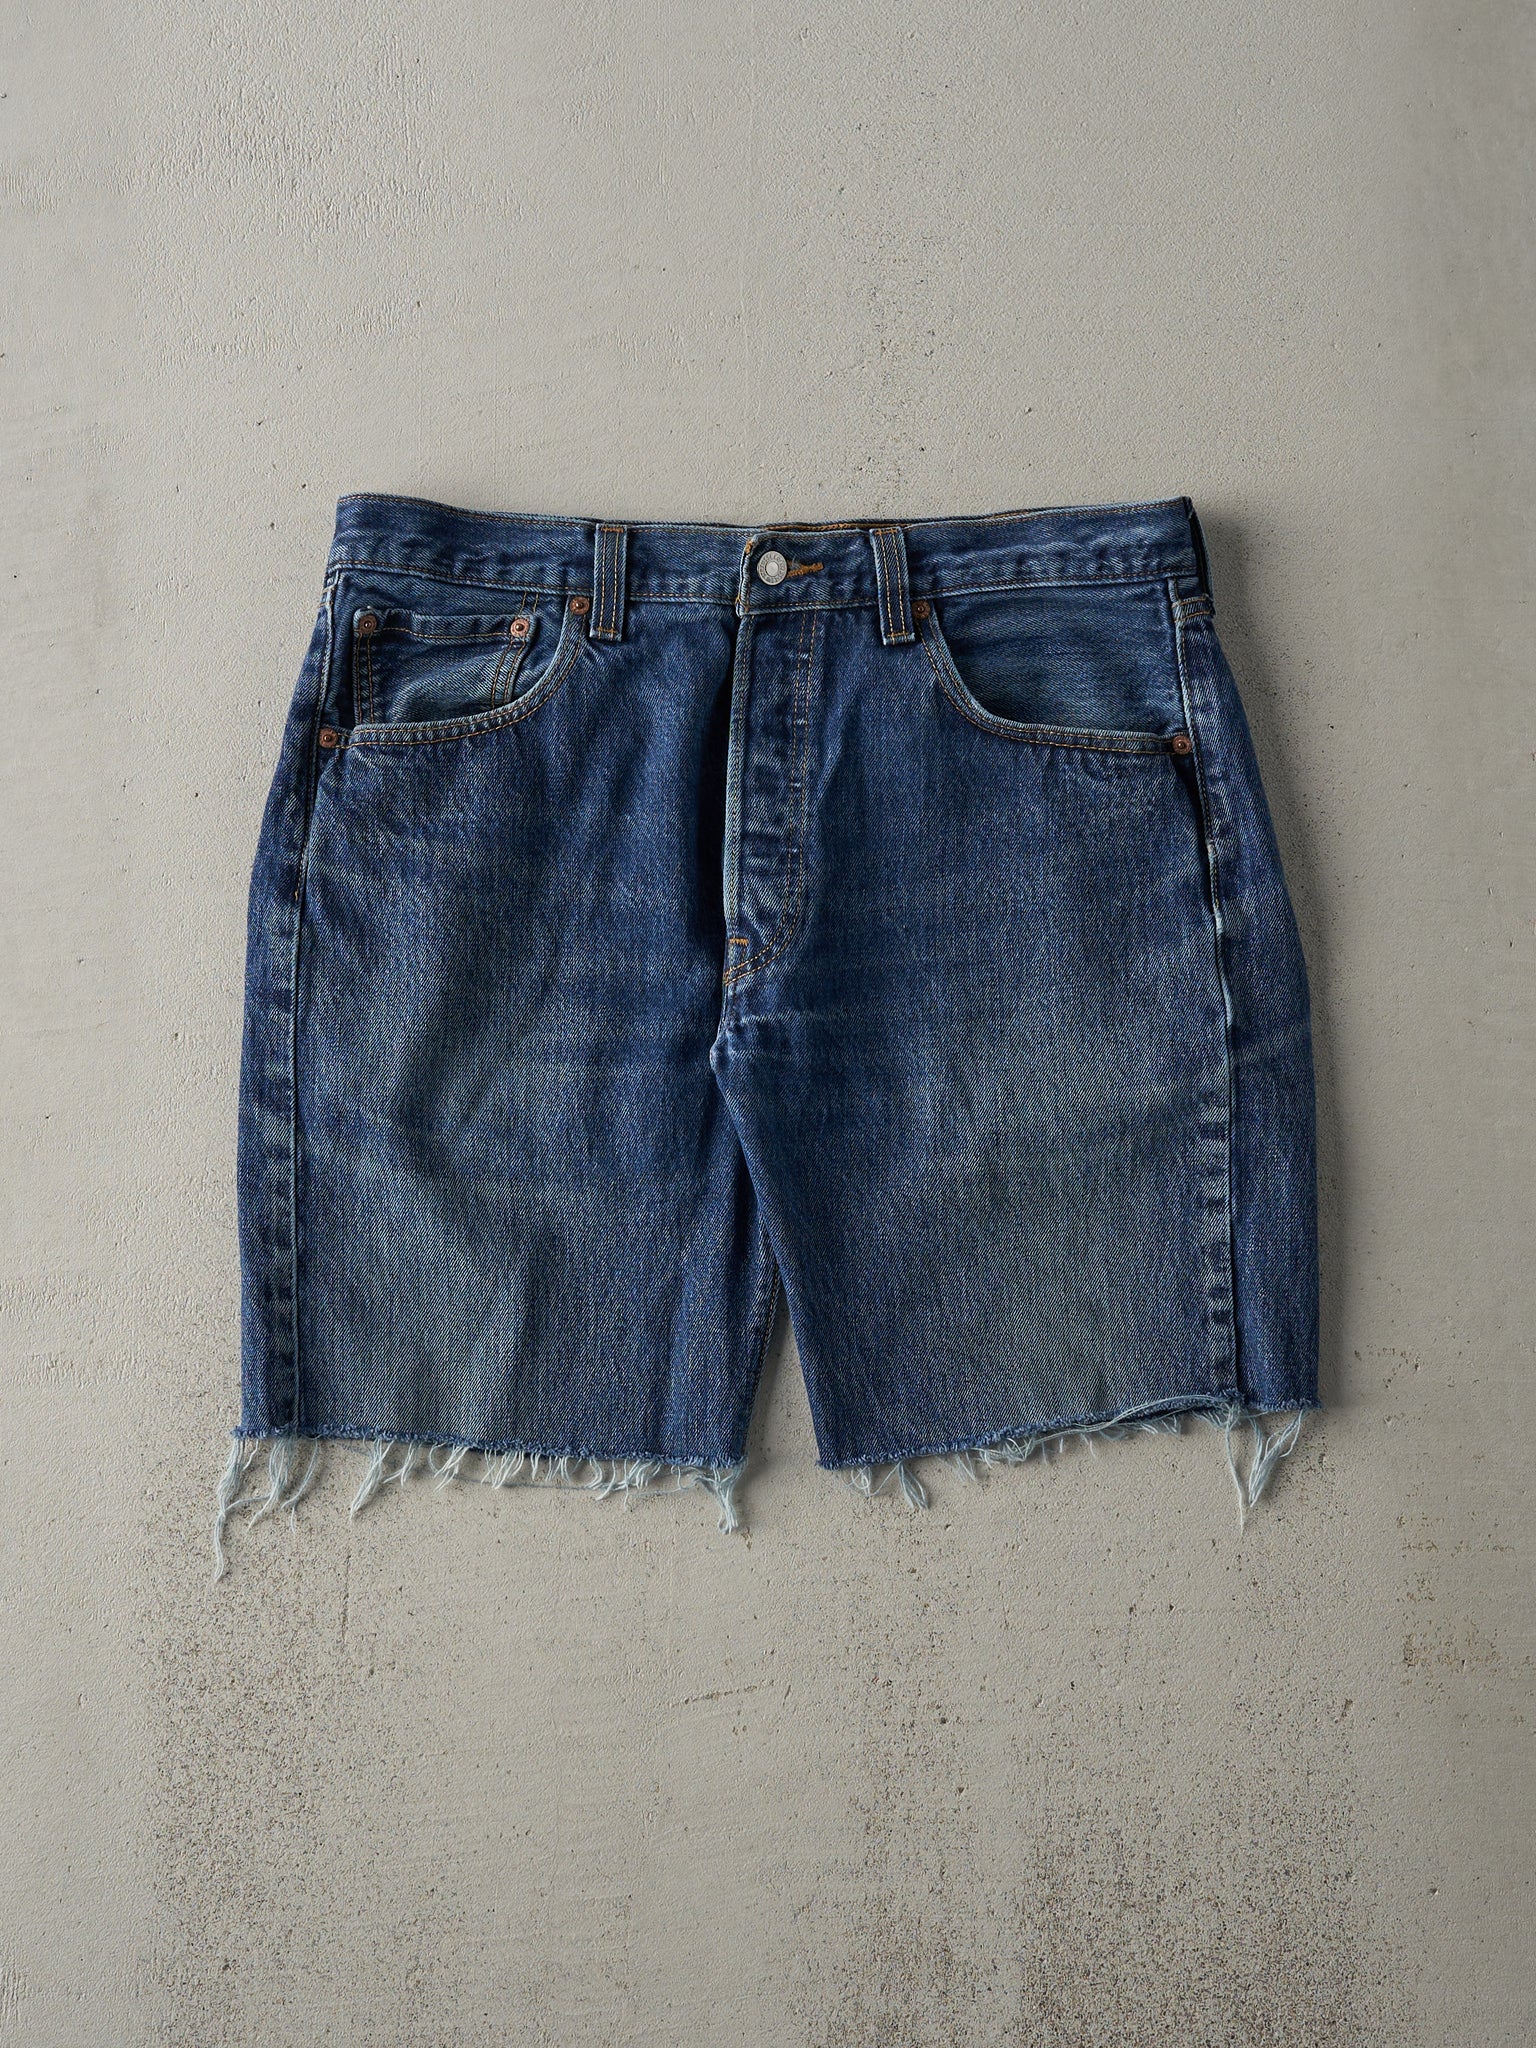 Vintage 90s Dark Wash Levi's 501 Straight Fit Cut Off Jean Shorts (34x8)